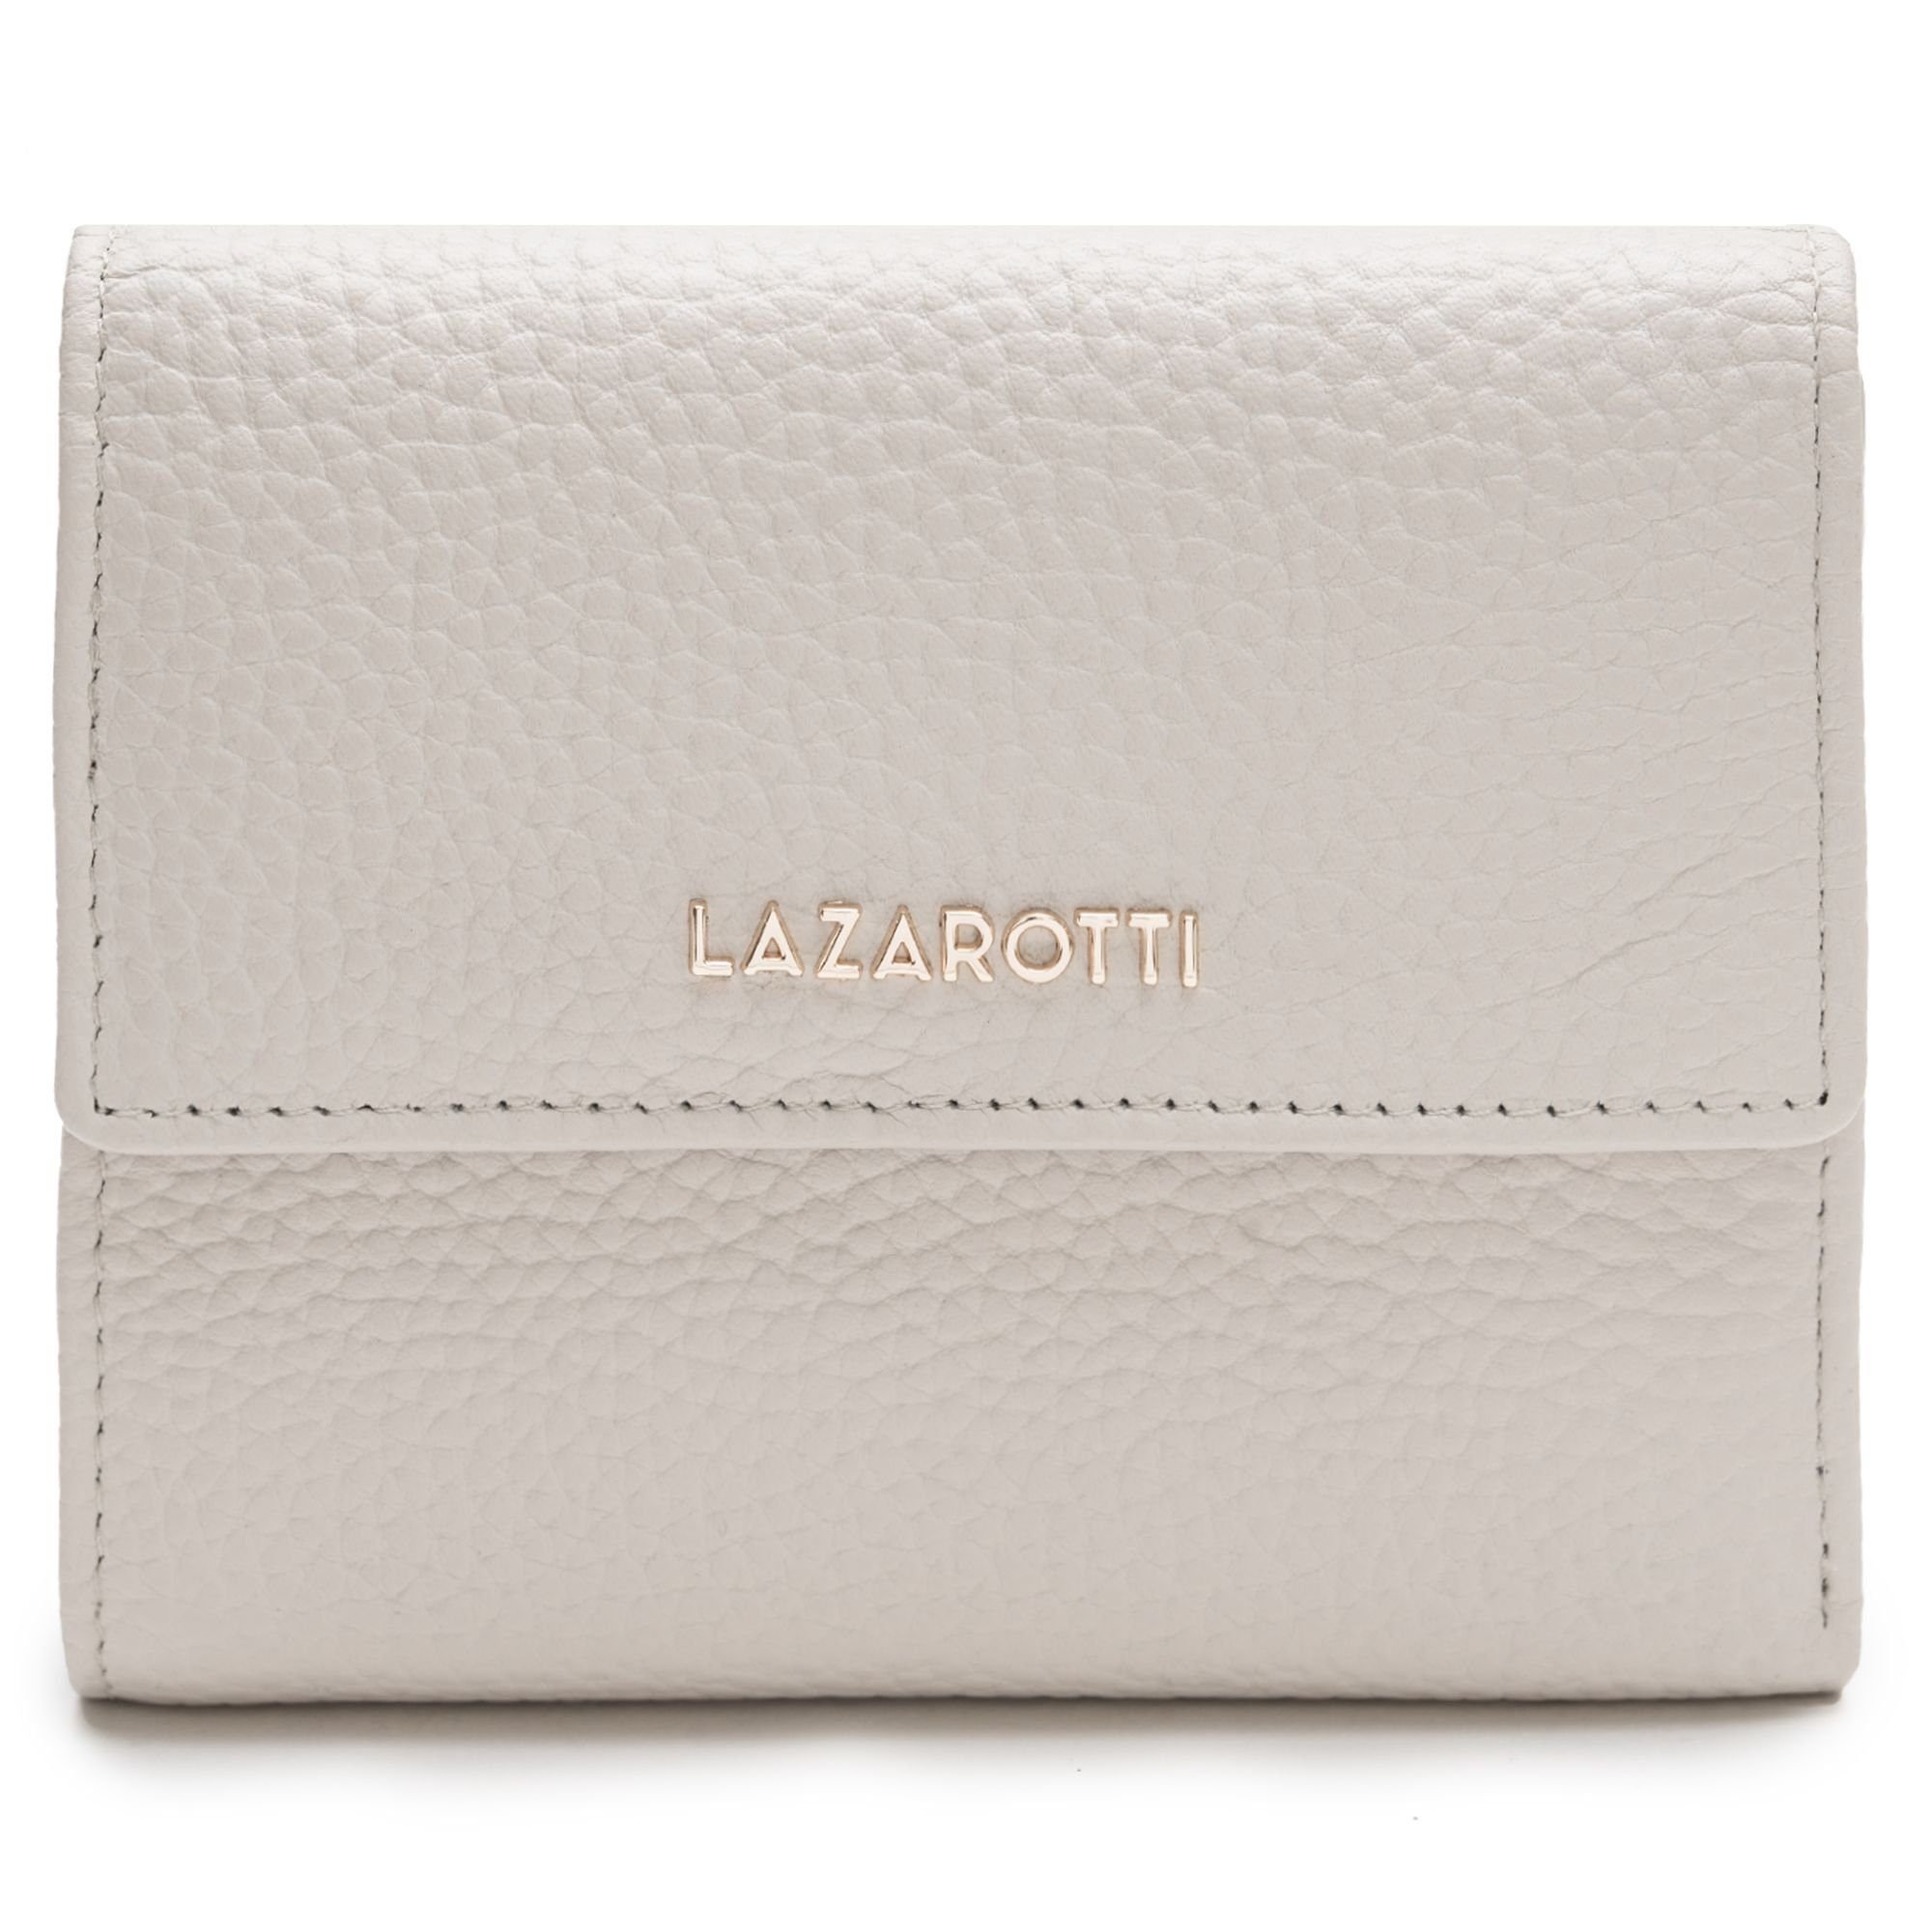 Lazarotti offwhite Leather, Bologna Leder Geldbörse